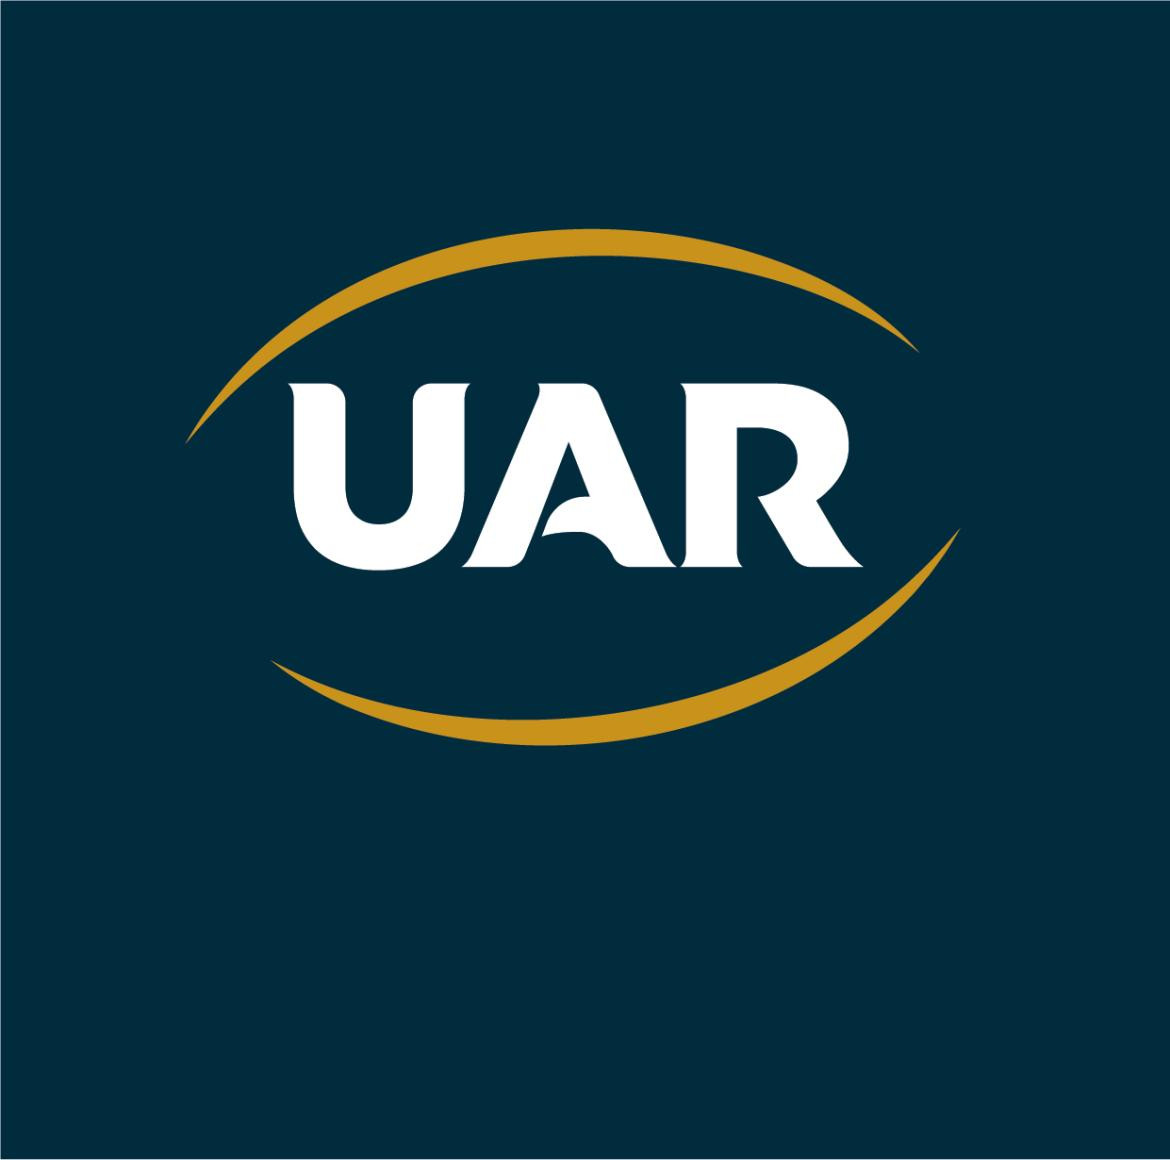 El nuevo logo de la UAR. Foto: Twitter @unionargentina.